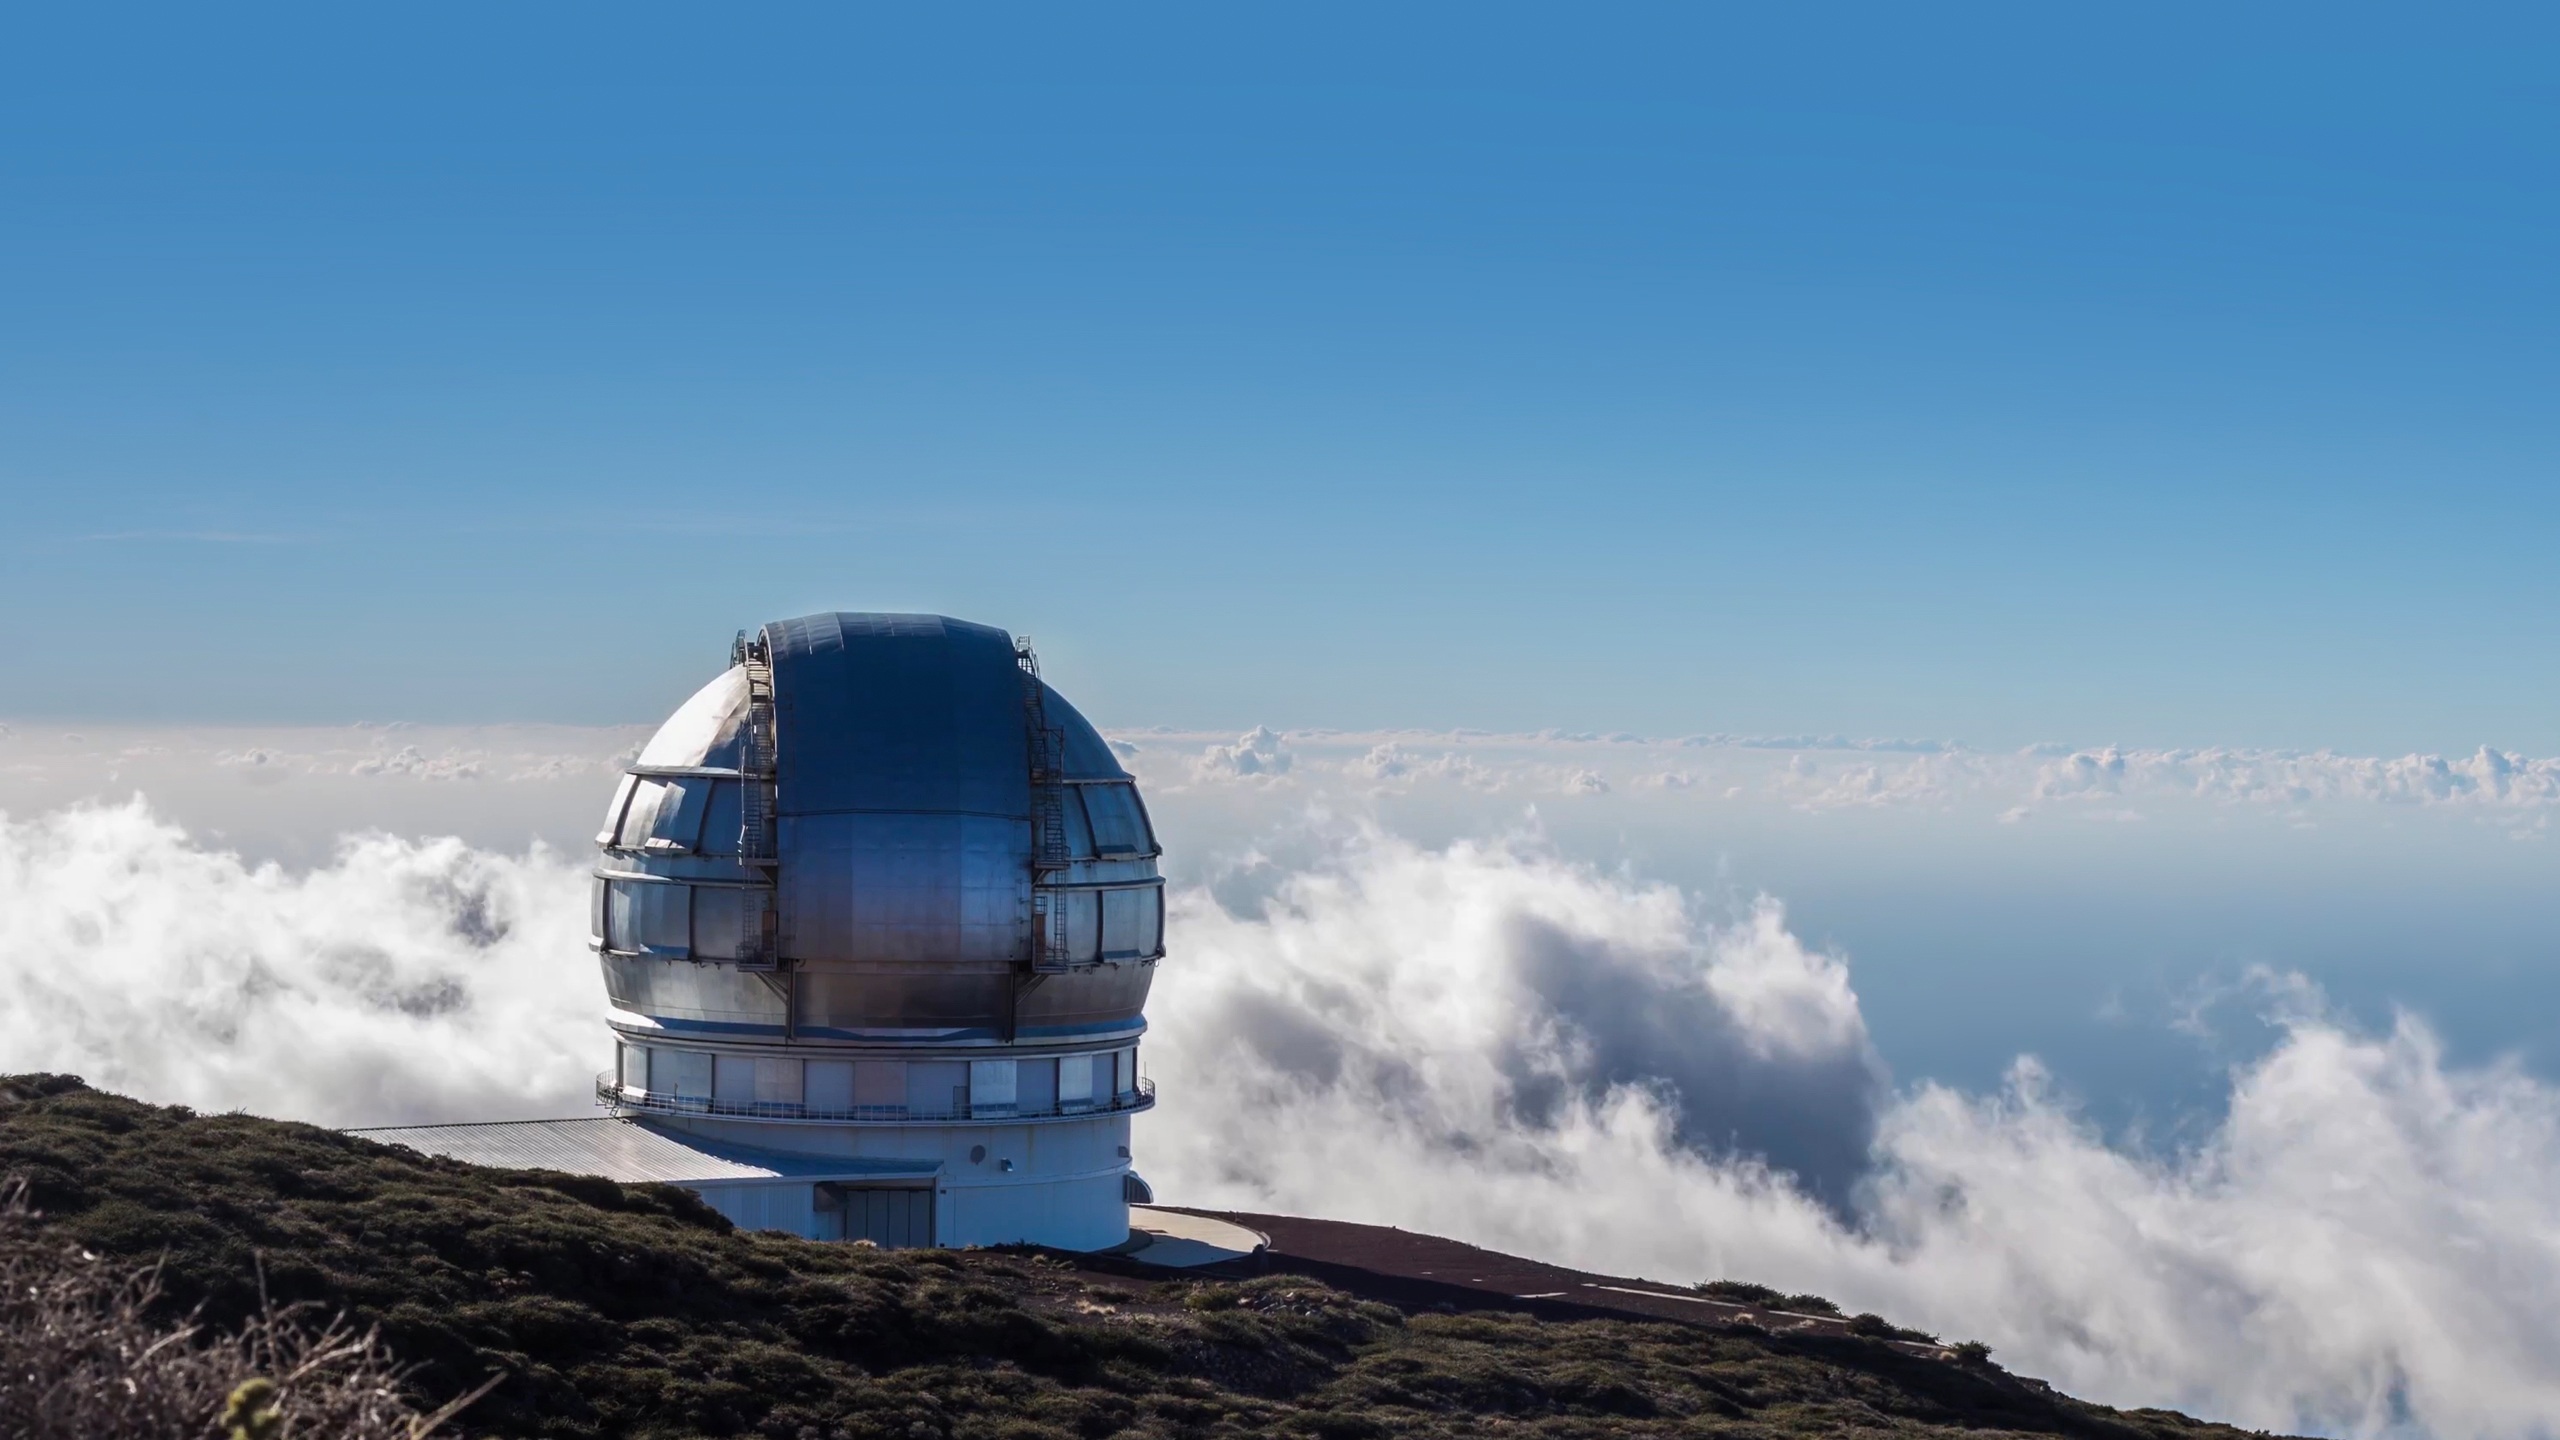 The Gran Telescopio Canarias Also Known As Great Canary